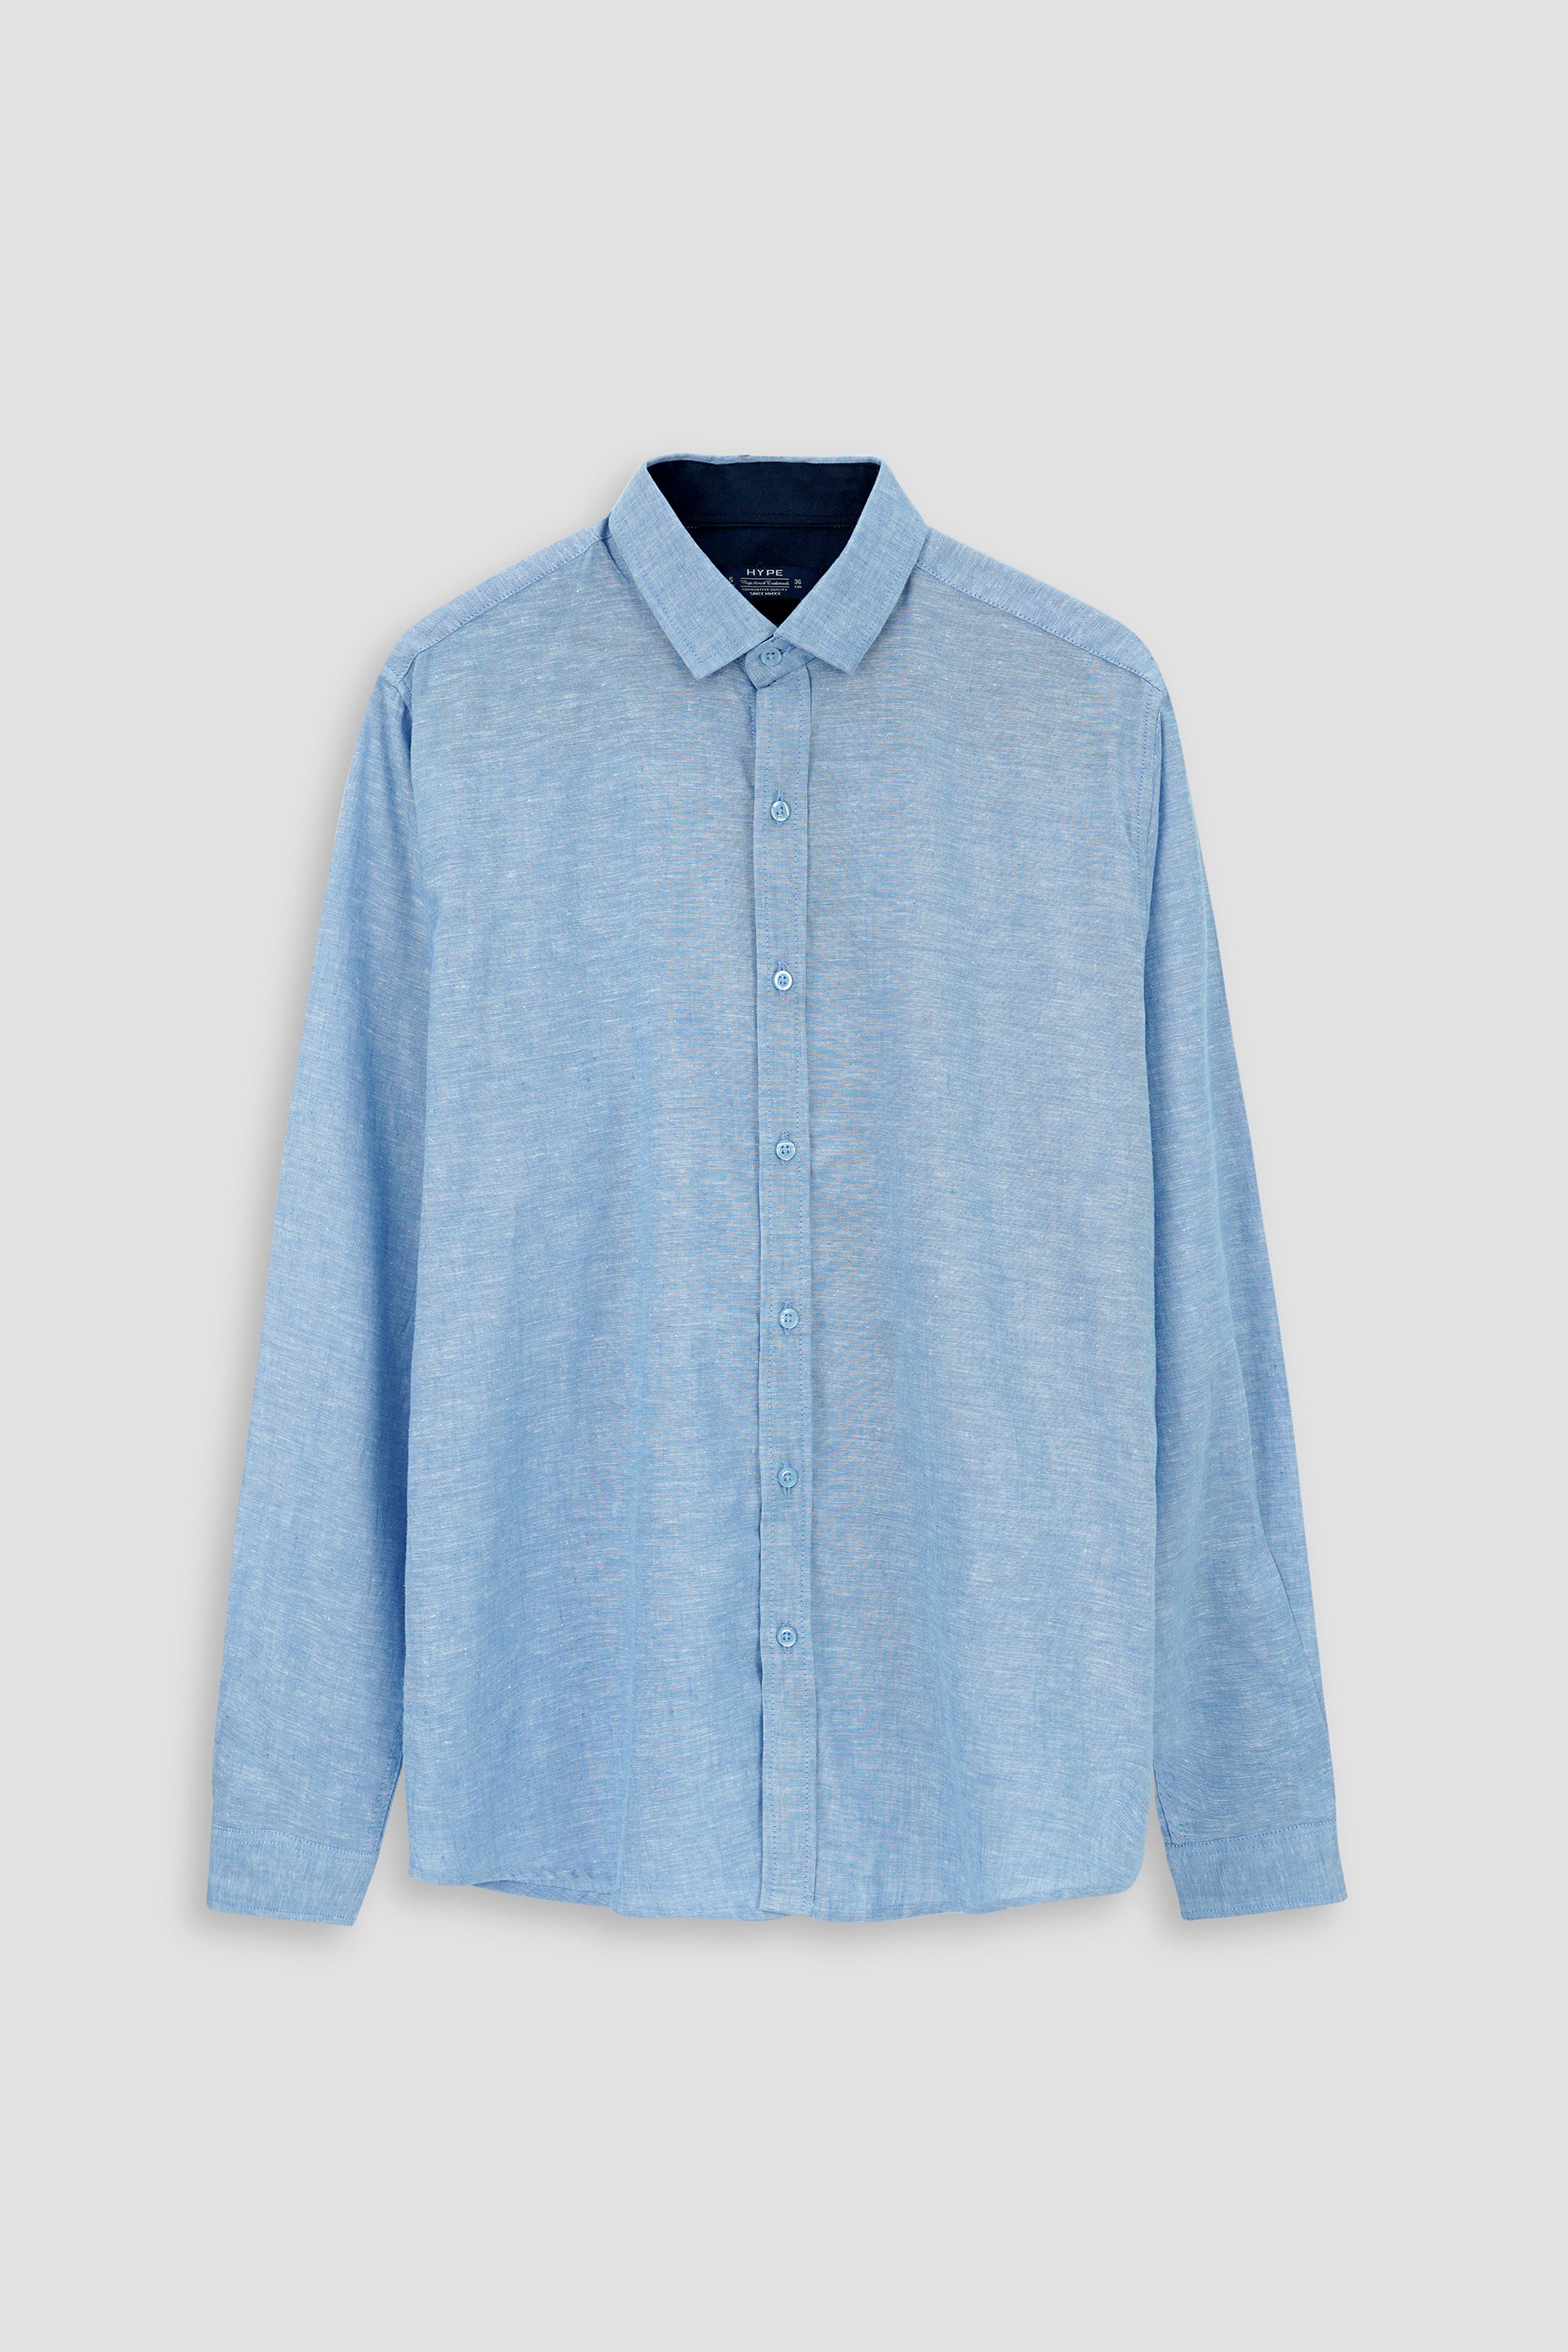 Mens Soft Cotton Casual Shirt 002478